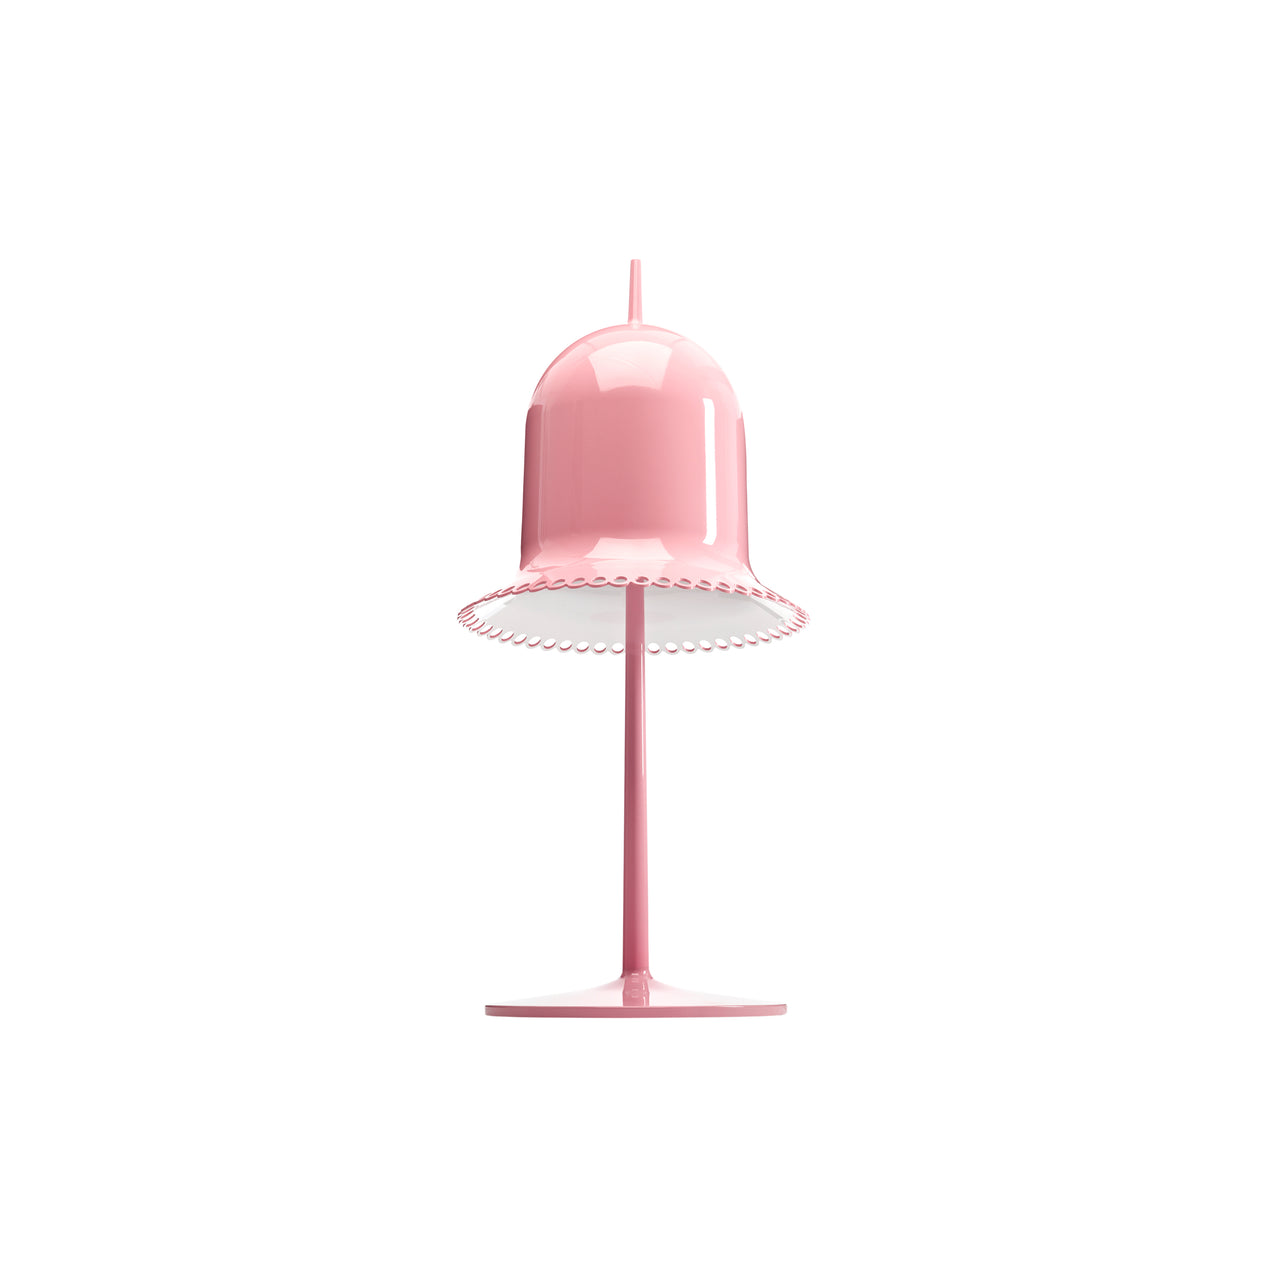 Lolita Table Lamp: Pink